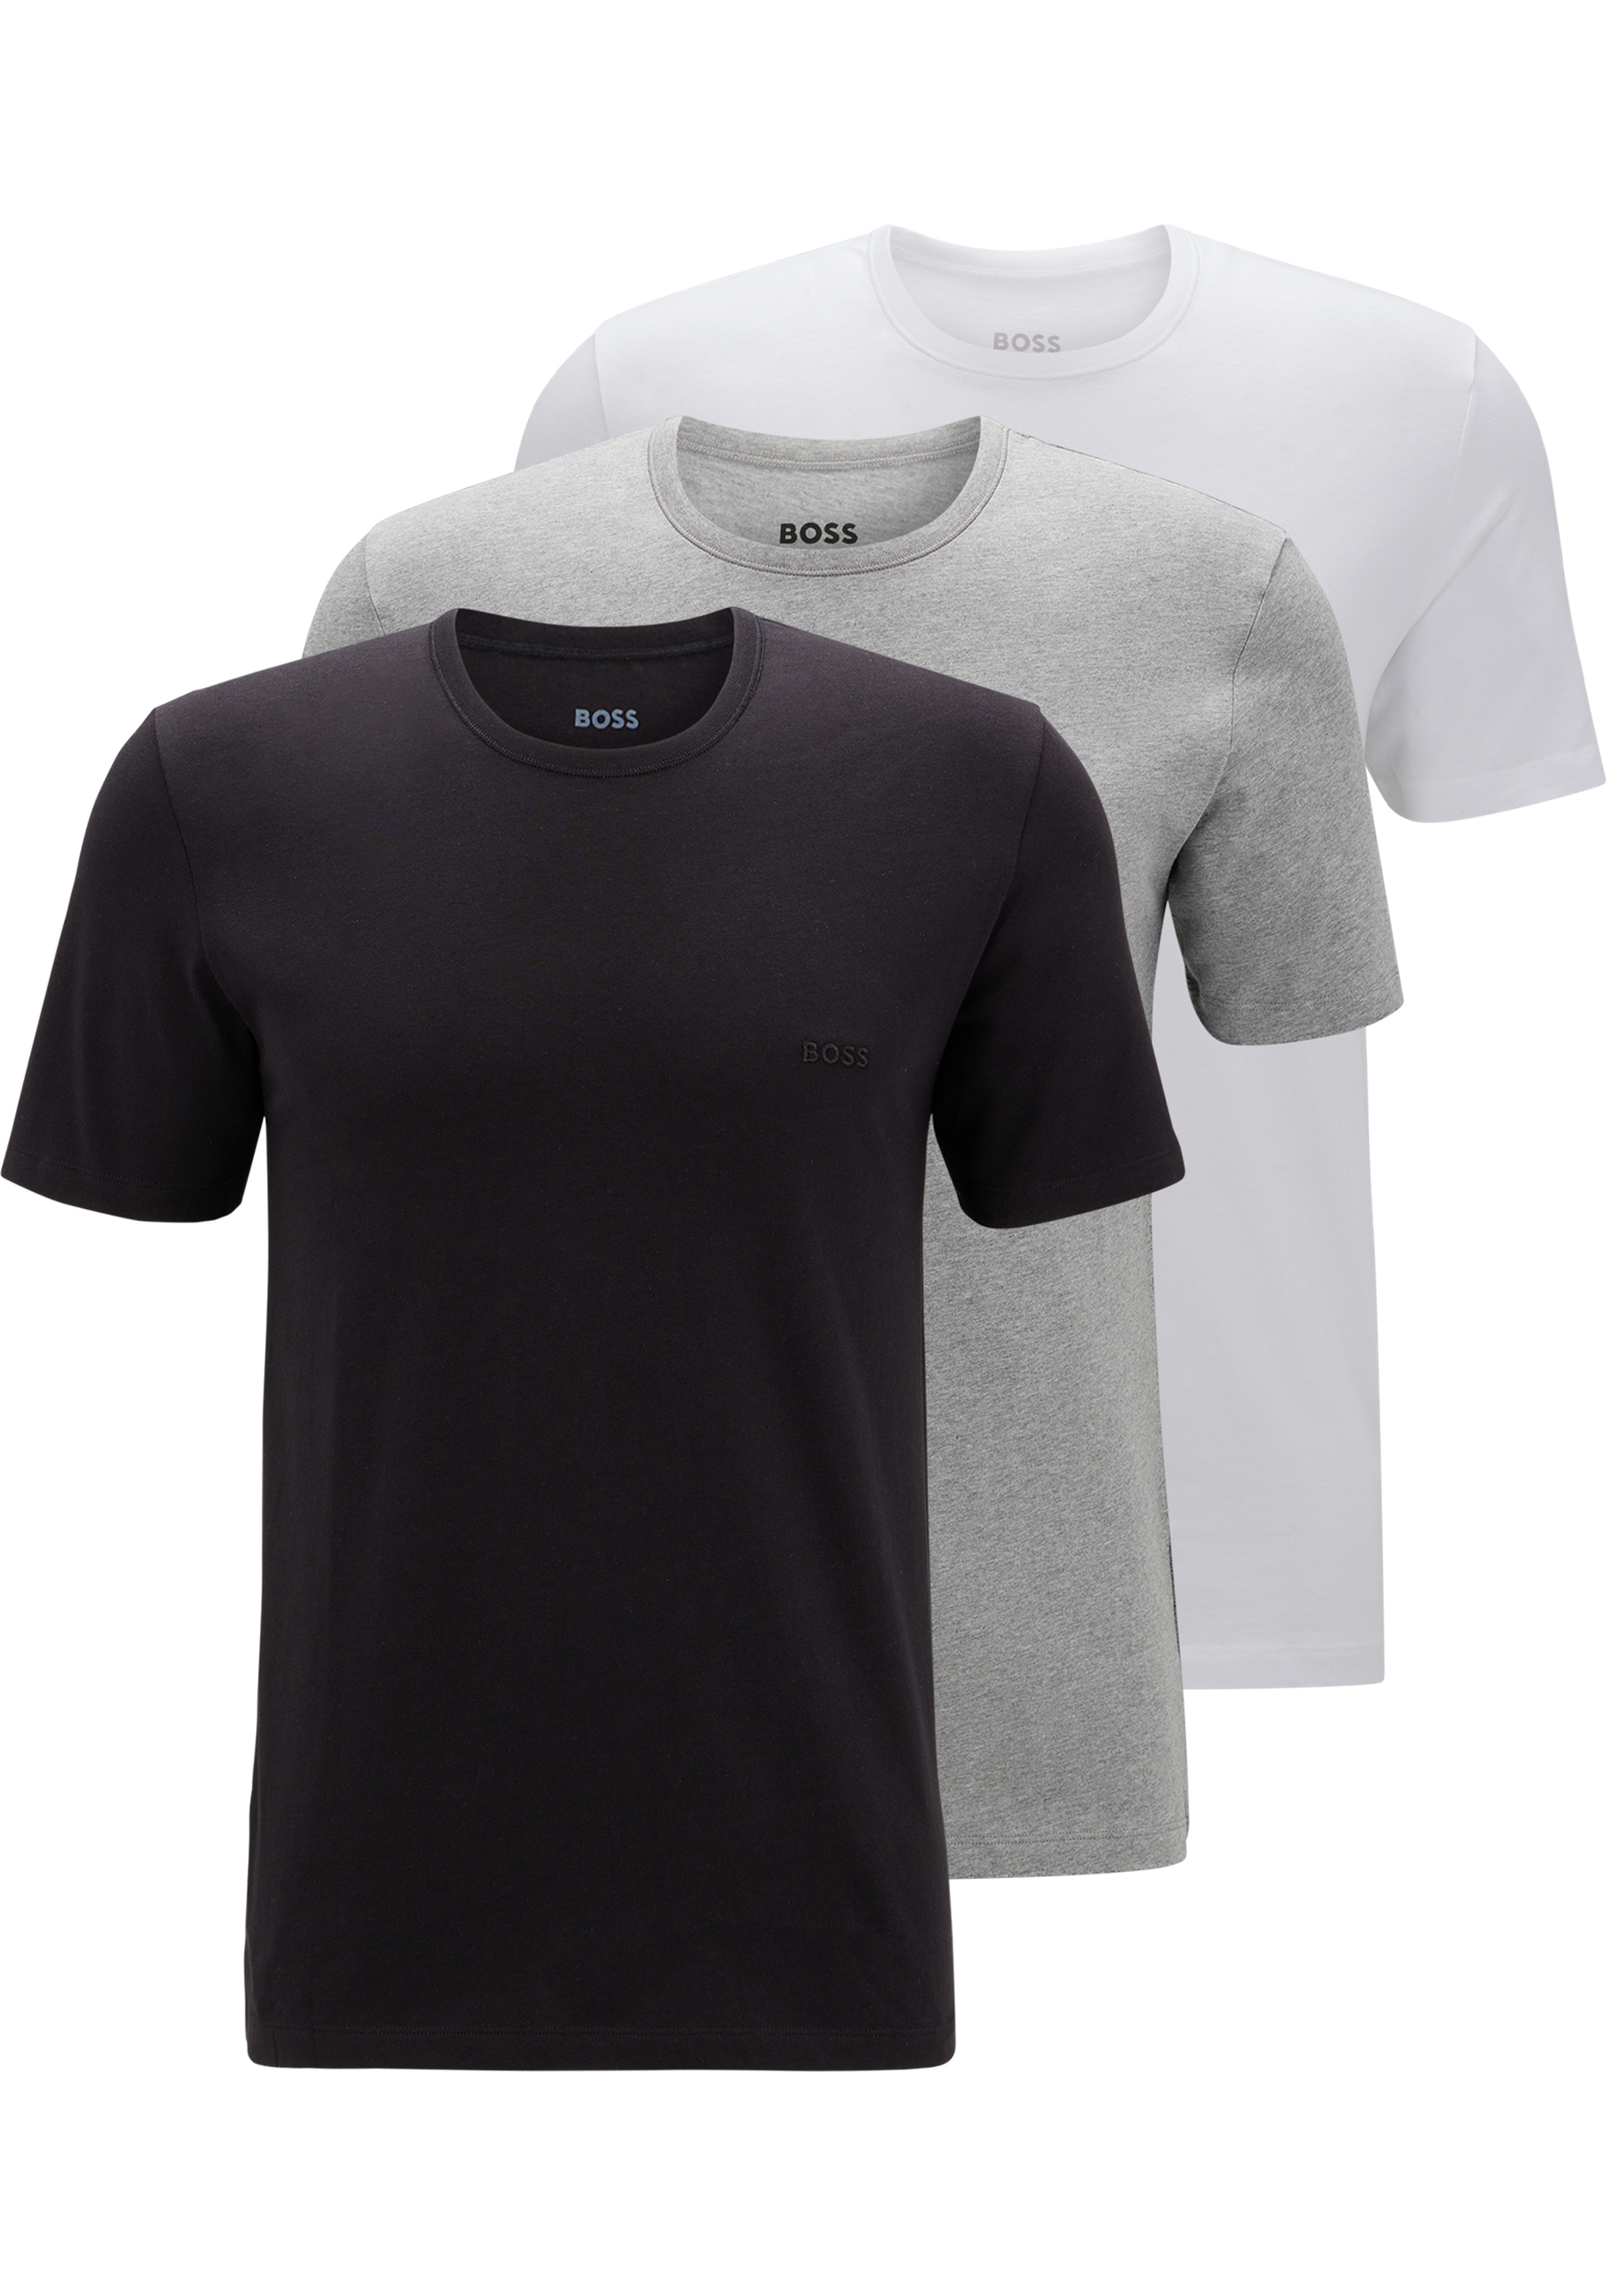 BOSS Classic T-shirts regular fit (3-pack), heren T-shirts O-hals,... - SALE tot 70% korting